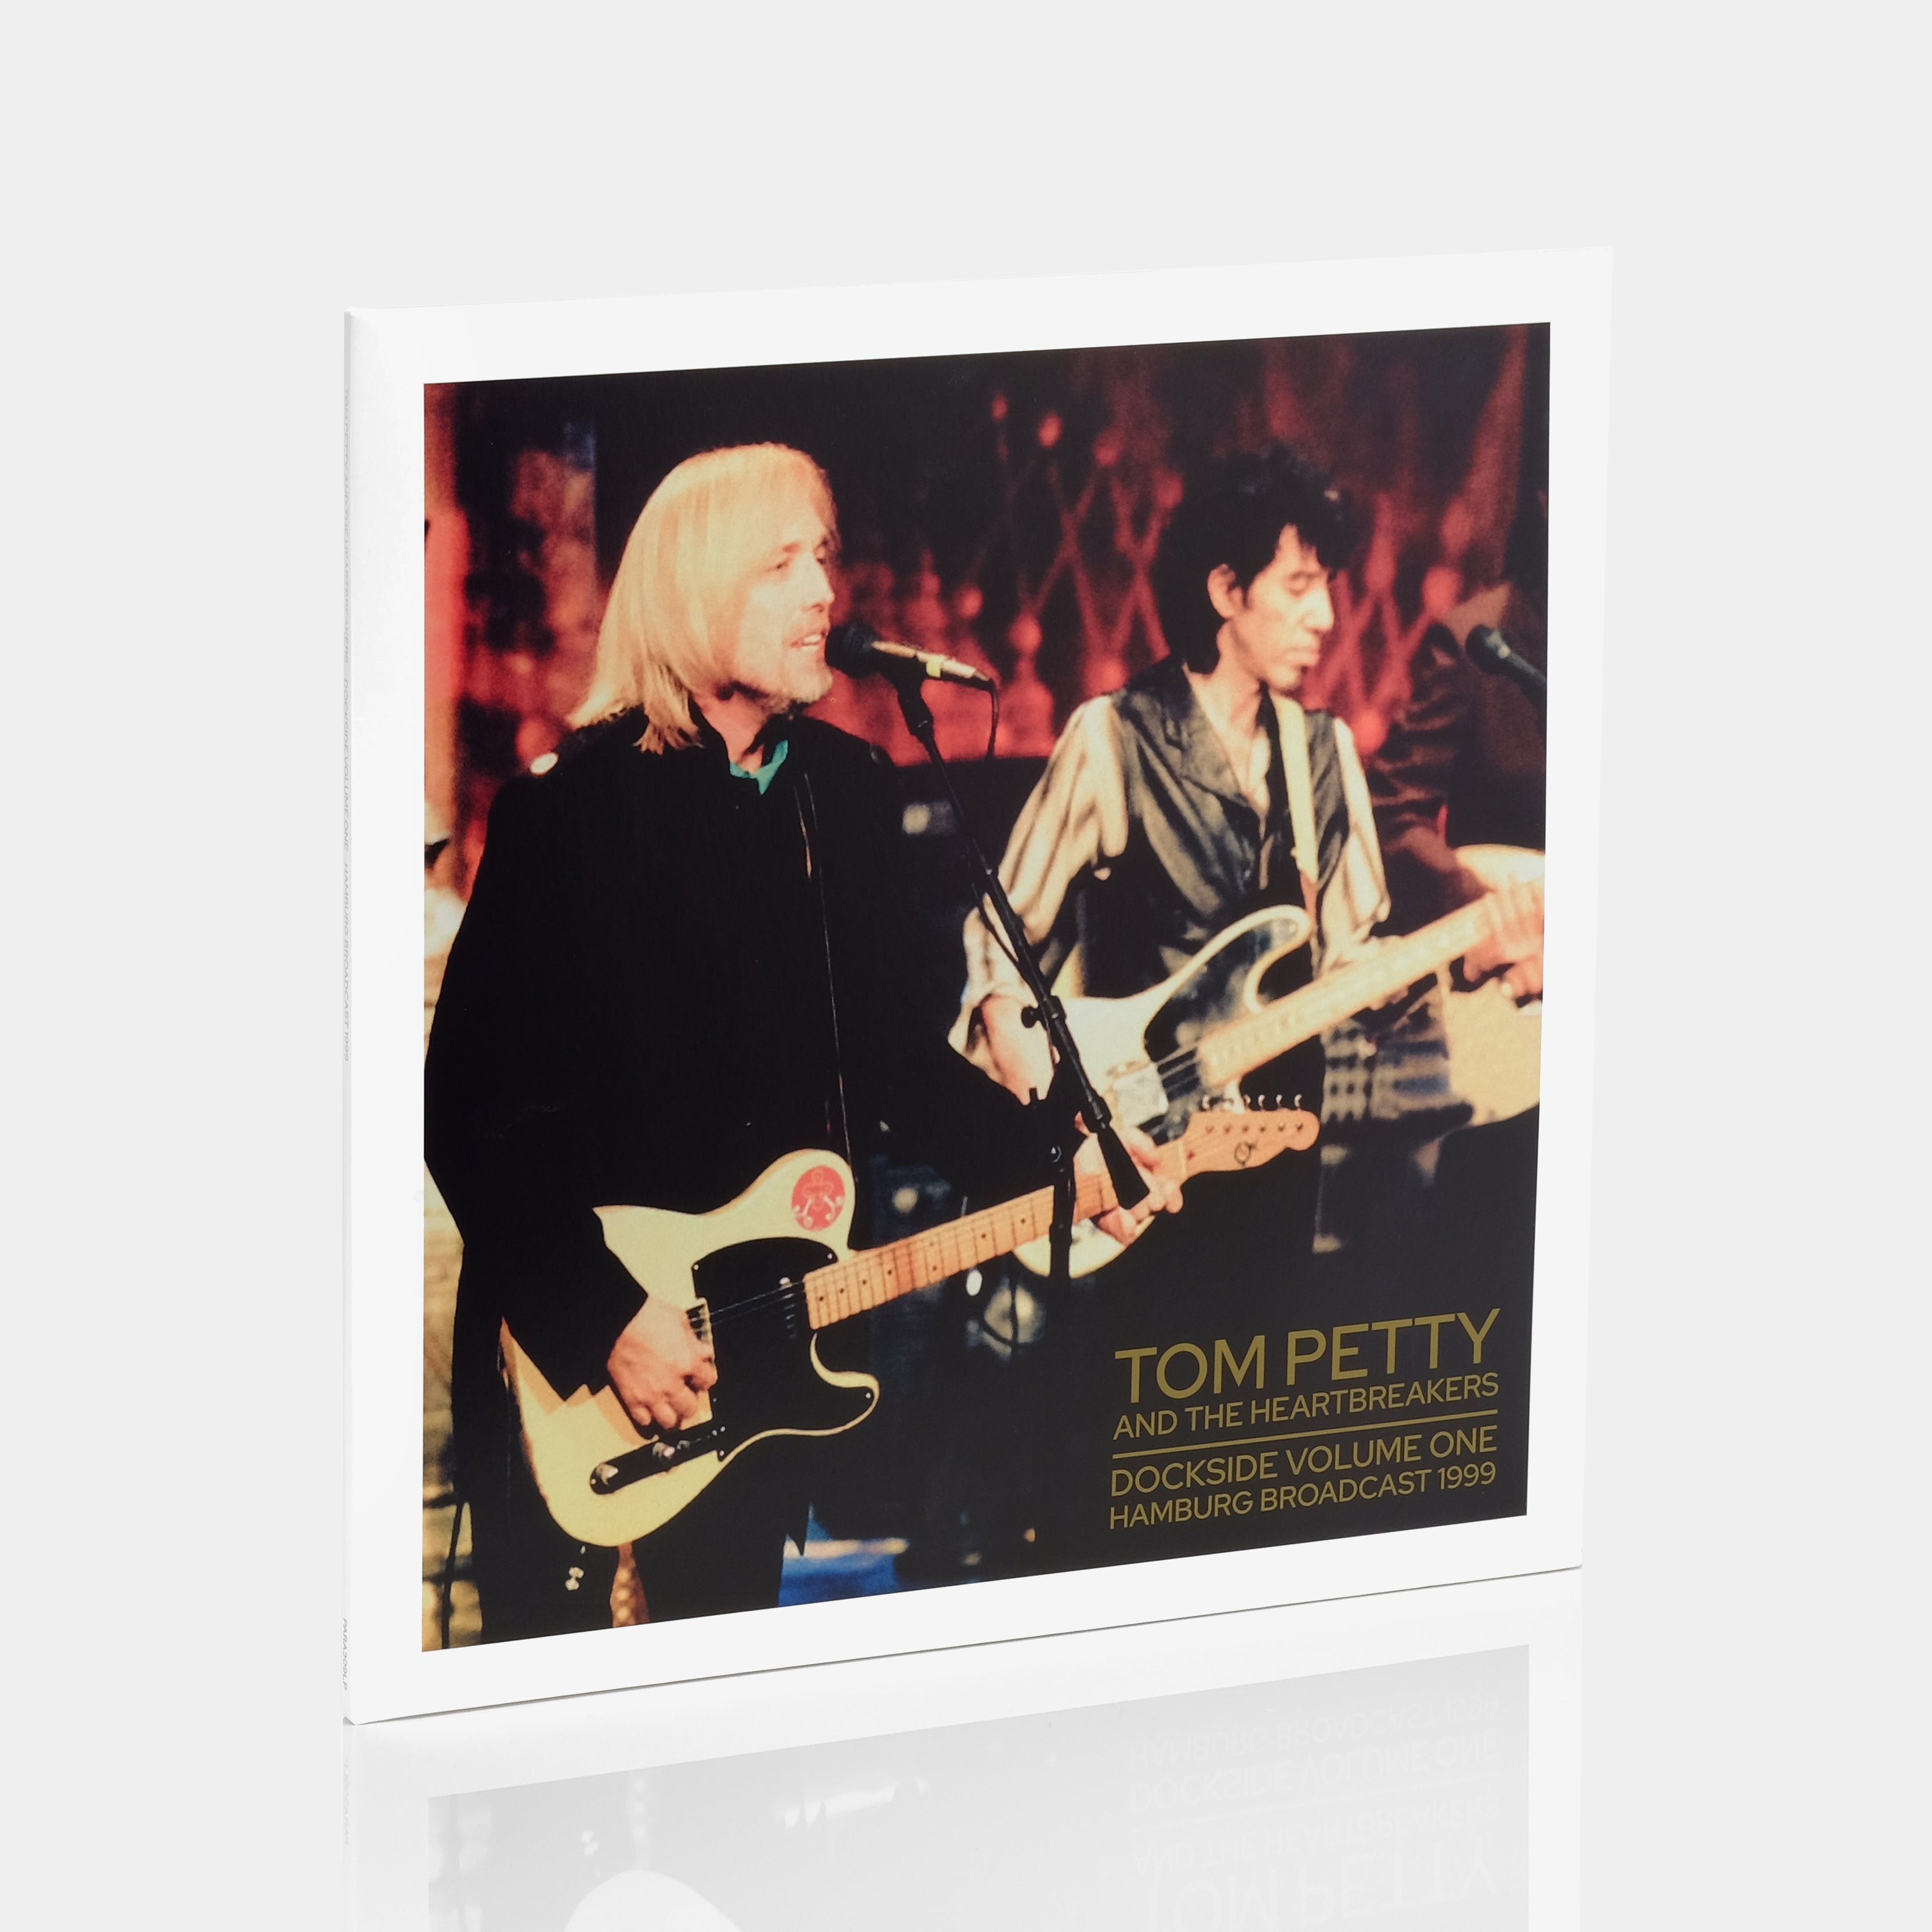 Tom Petty and the Heartbreakers - Dockside Volume One Hamburg Broadcast 1999 2xLP Vinyl Record